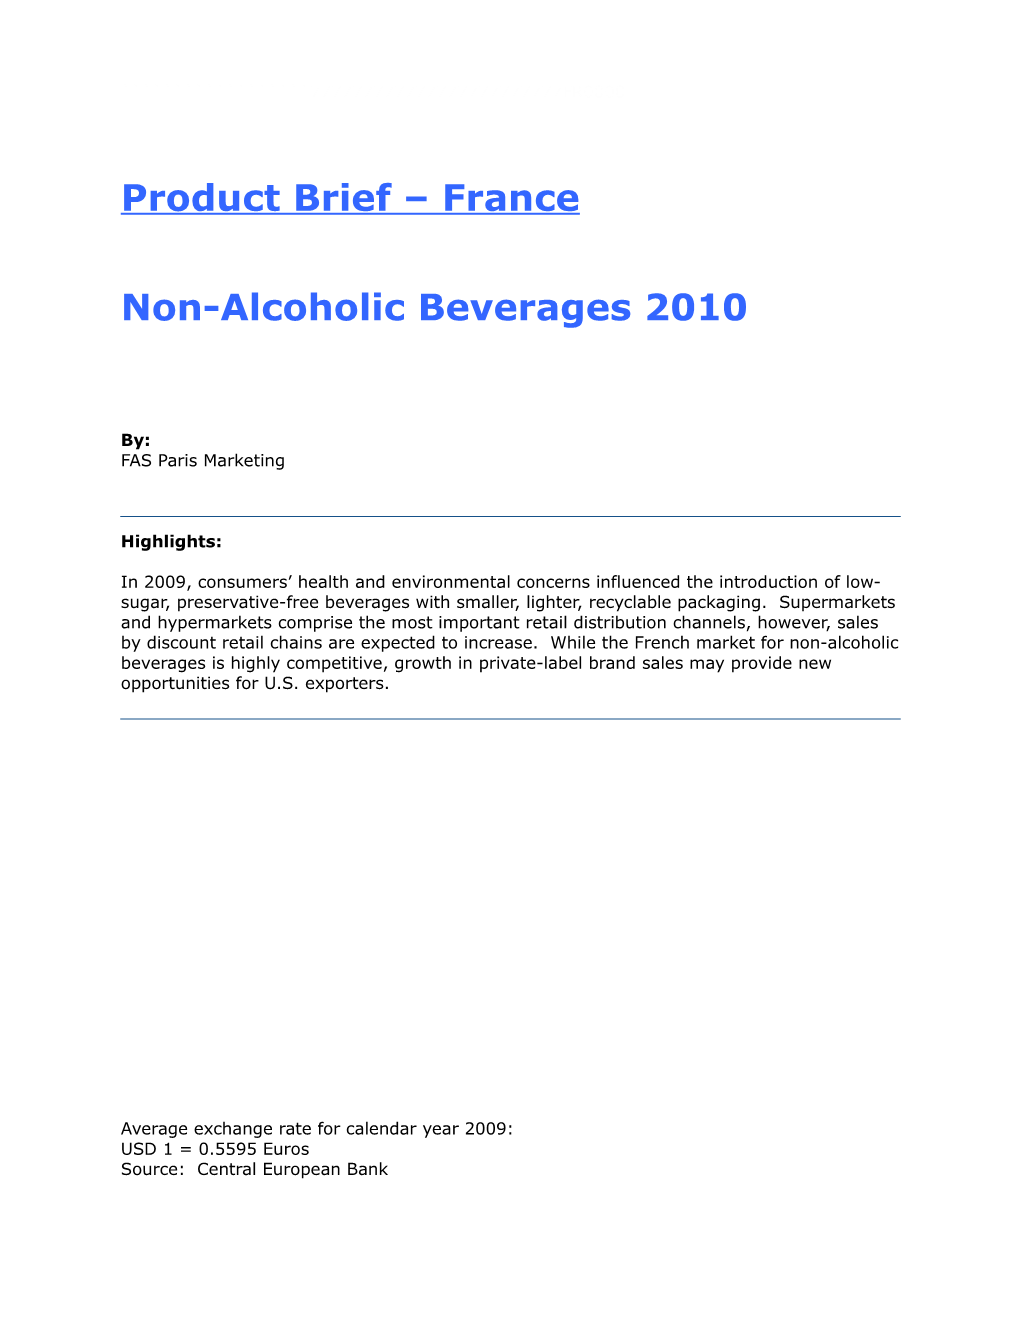 Non-Alcoholic Beverages 2010